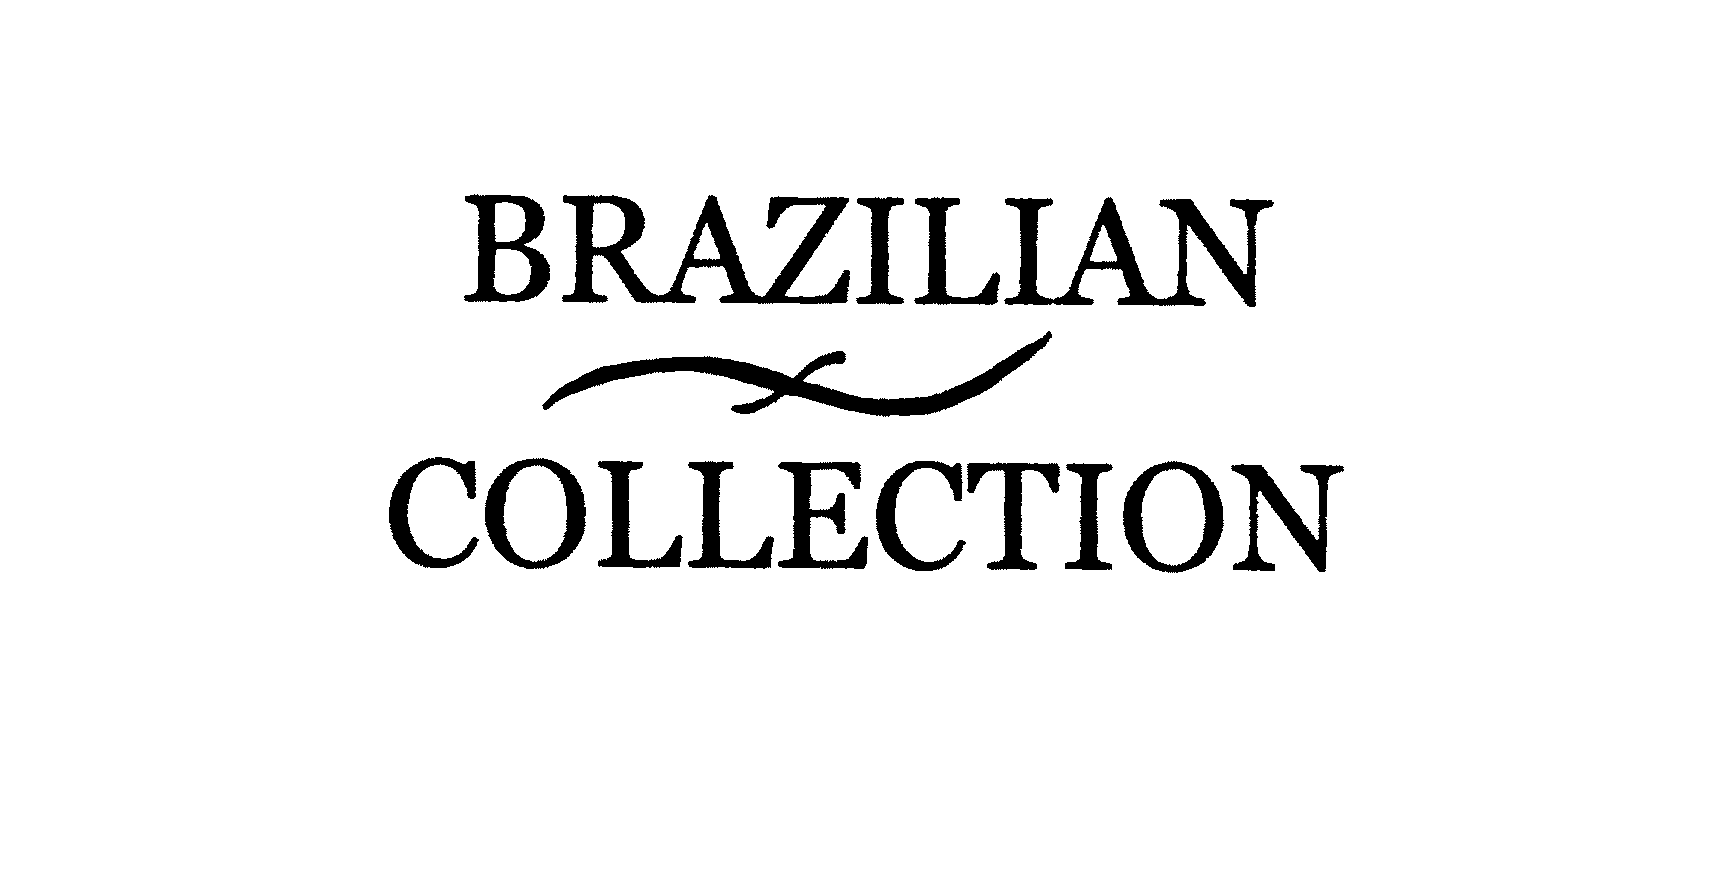  BRAZILIAN COLLECTION